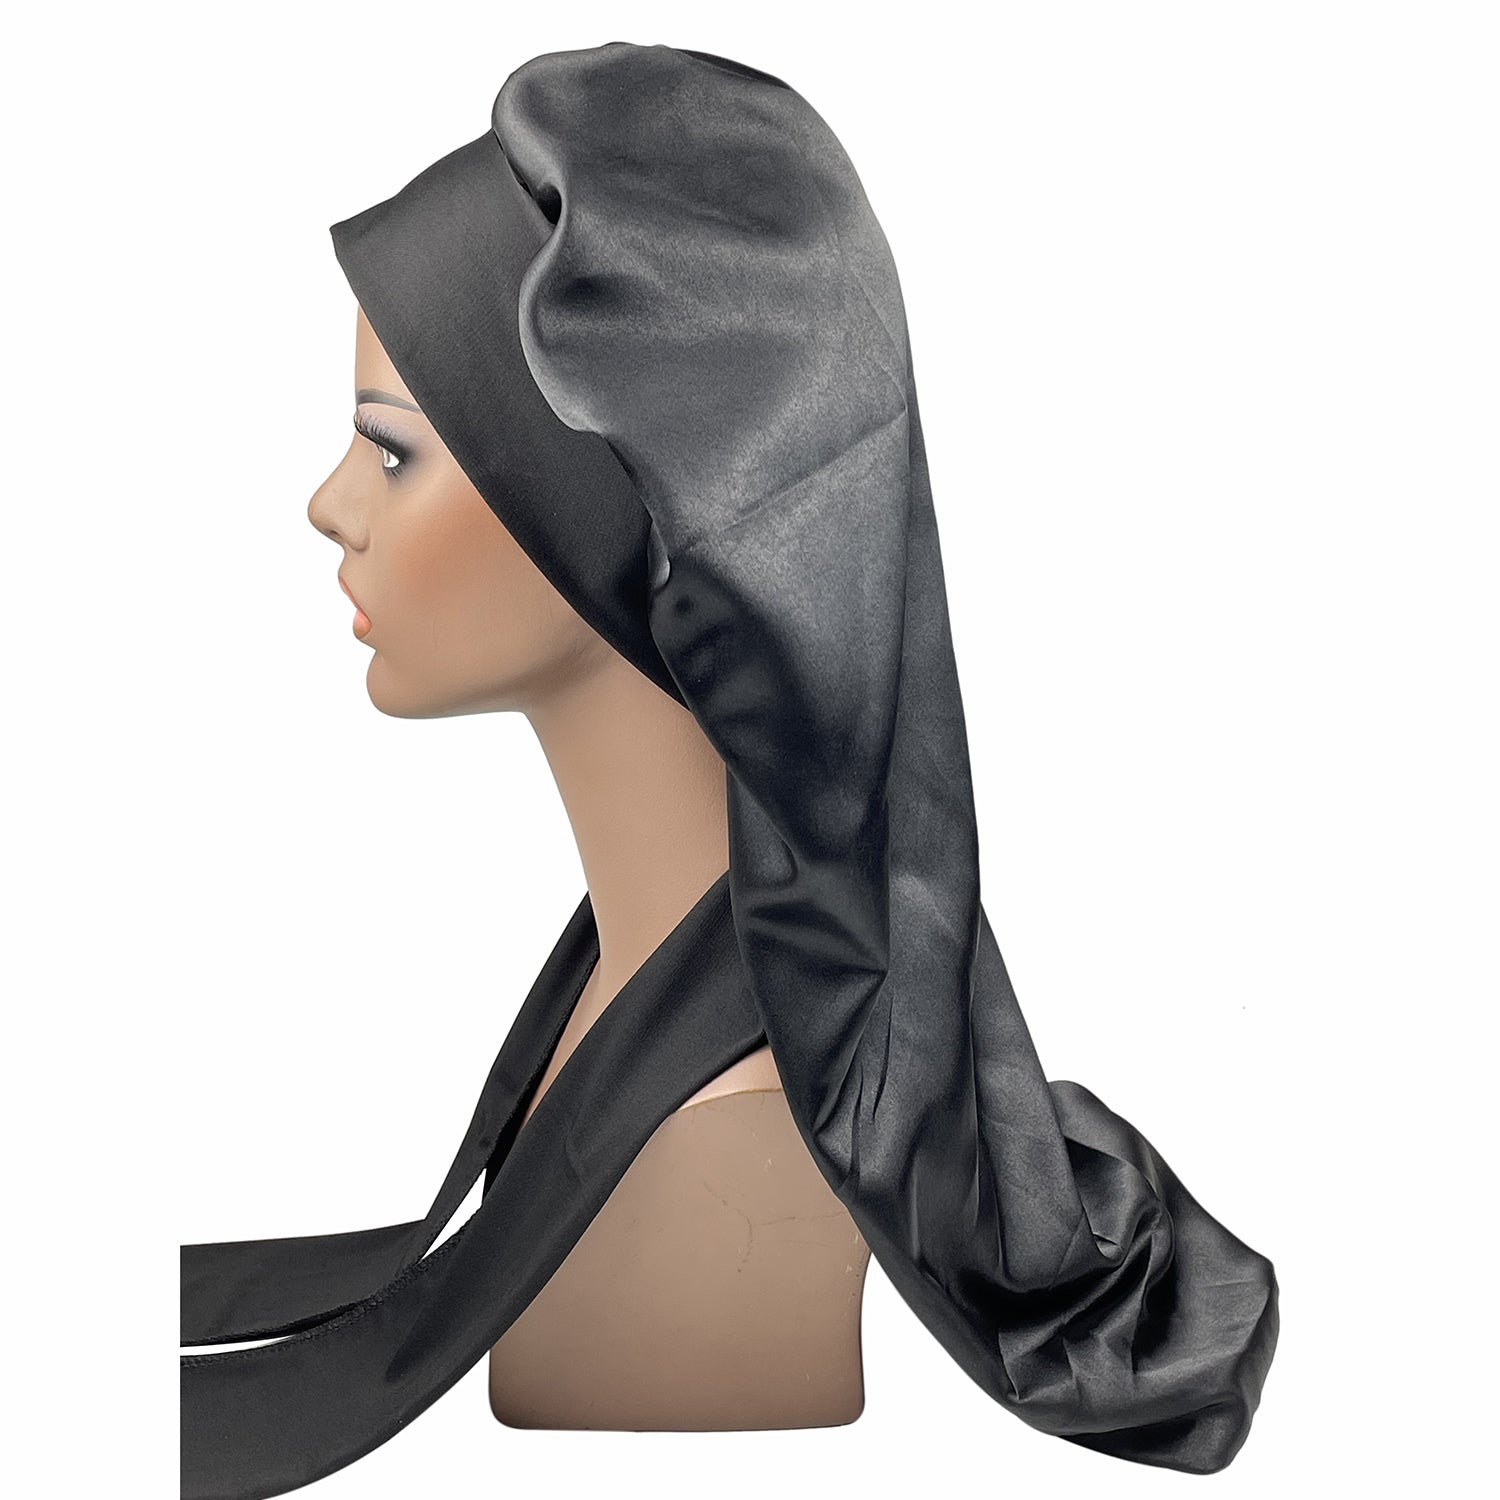 Silk Bonnet Satin Bonnet For Sleeping, Braid Bonnet For Long Hair With Tie  Band, Bonnet For Braids For Women Curly Hair - Temu Italy